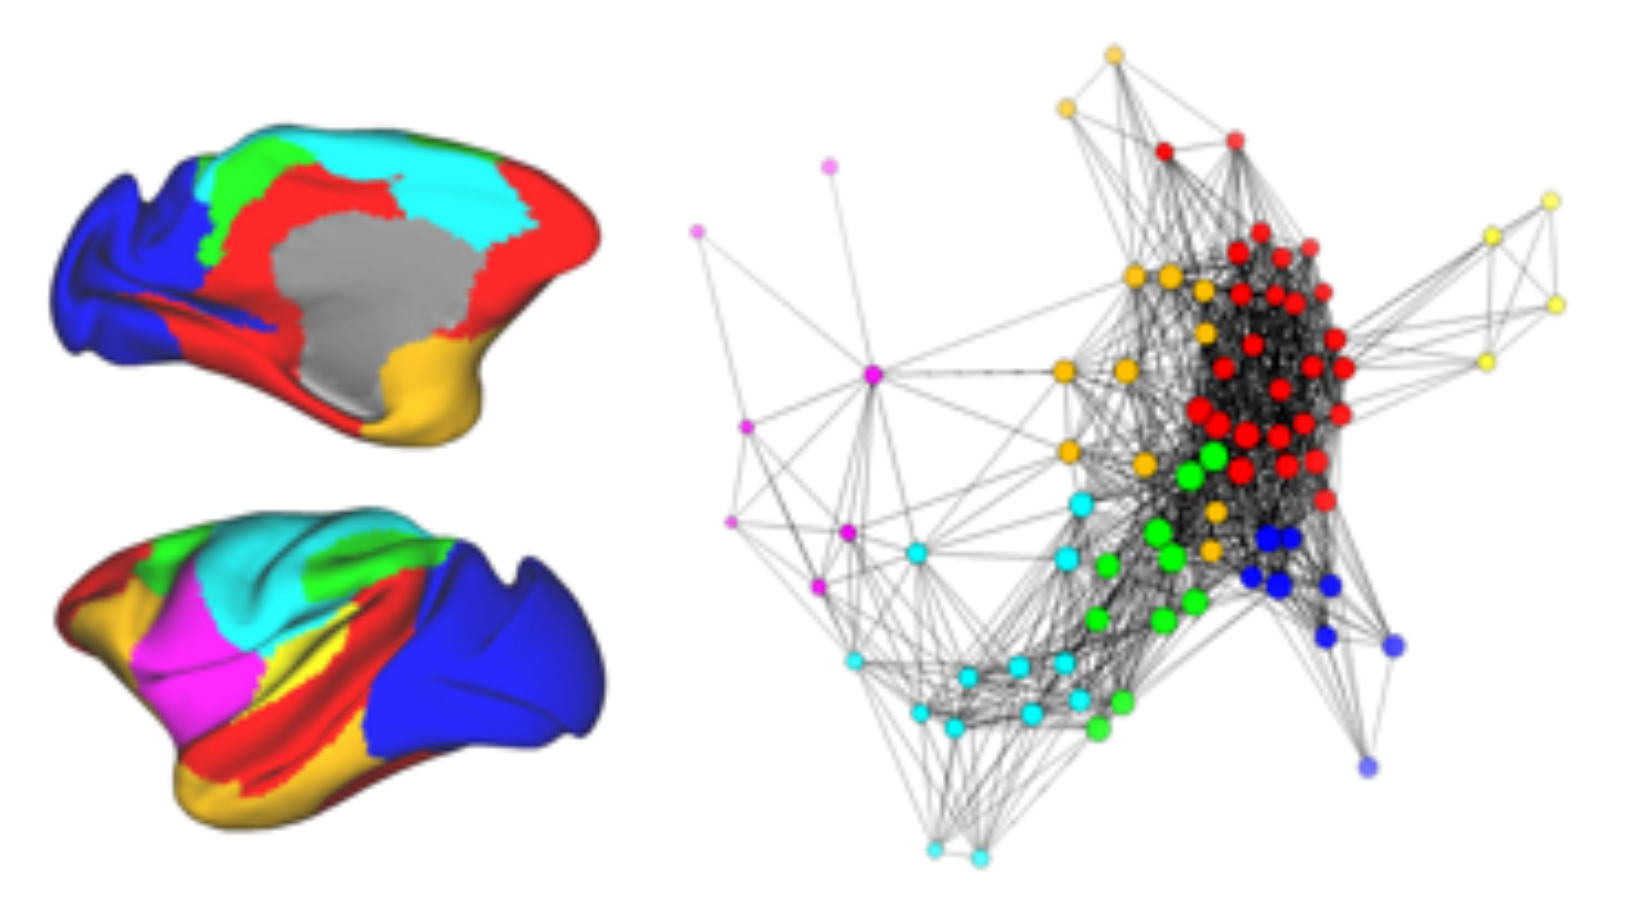 Model of the rhesus monkey brain